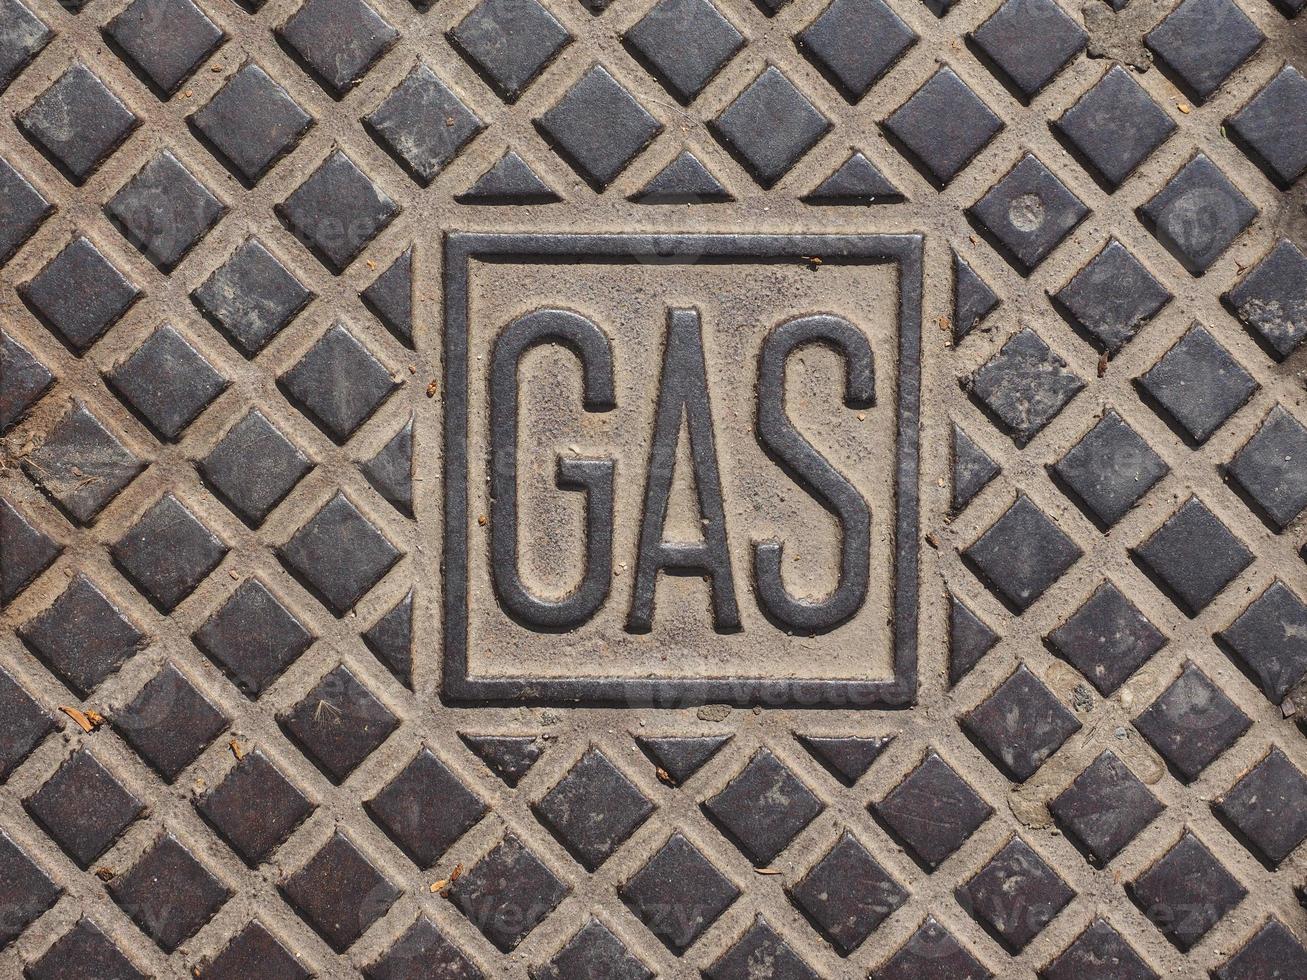 Gas manhole grid photo